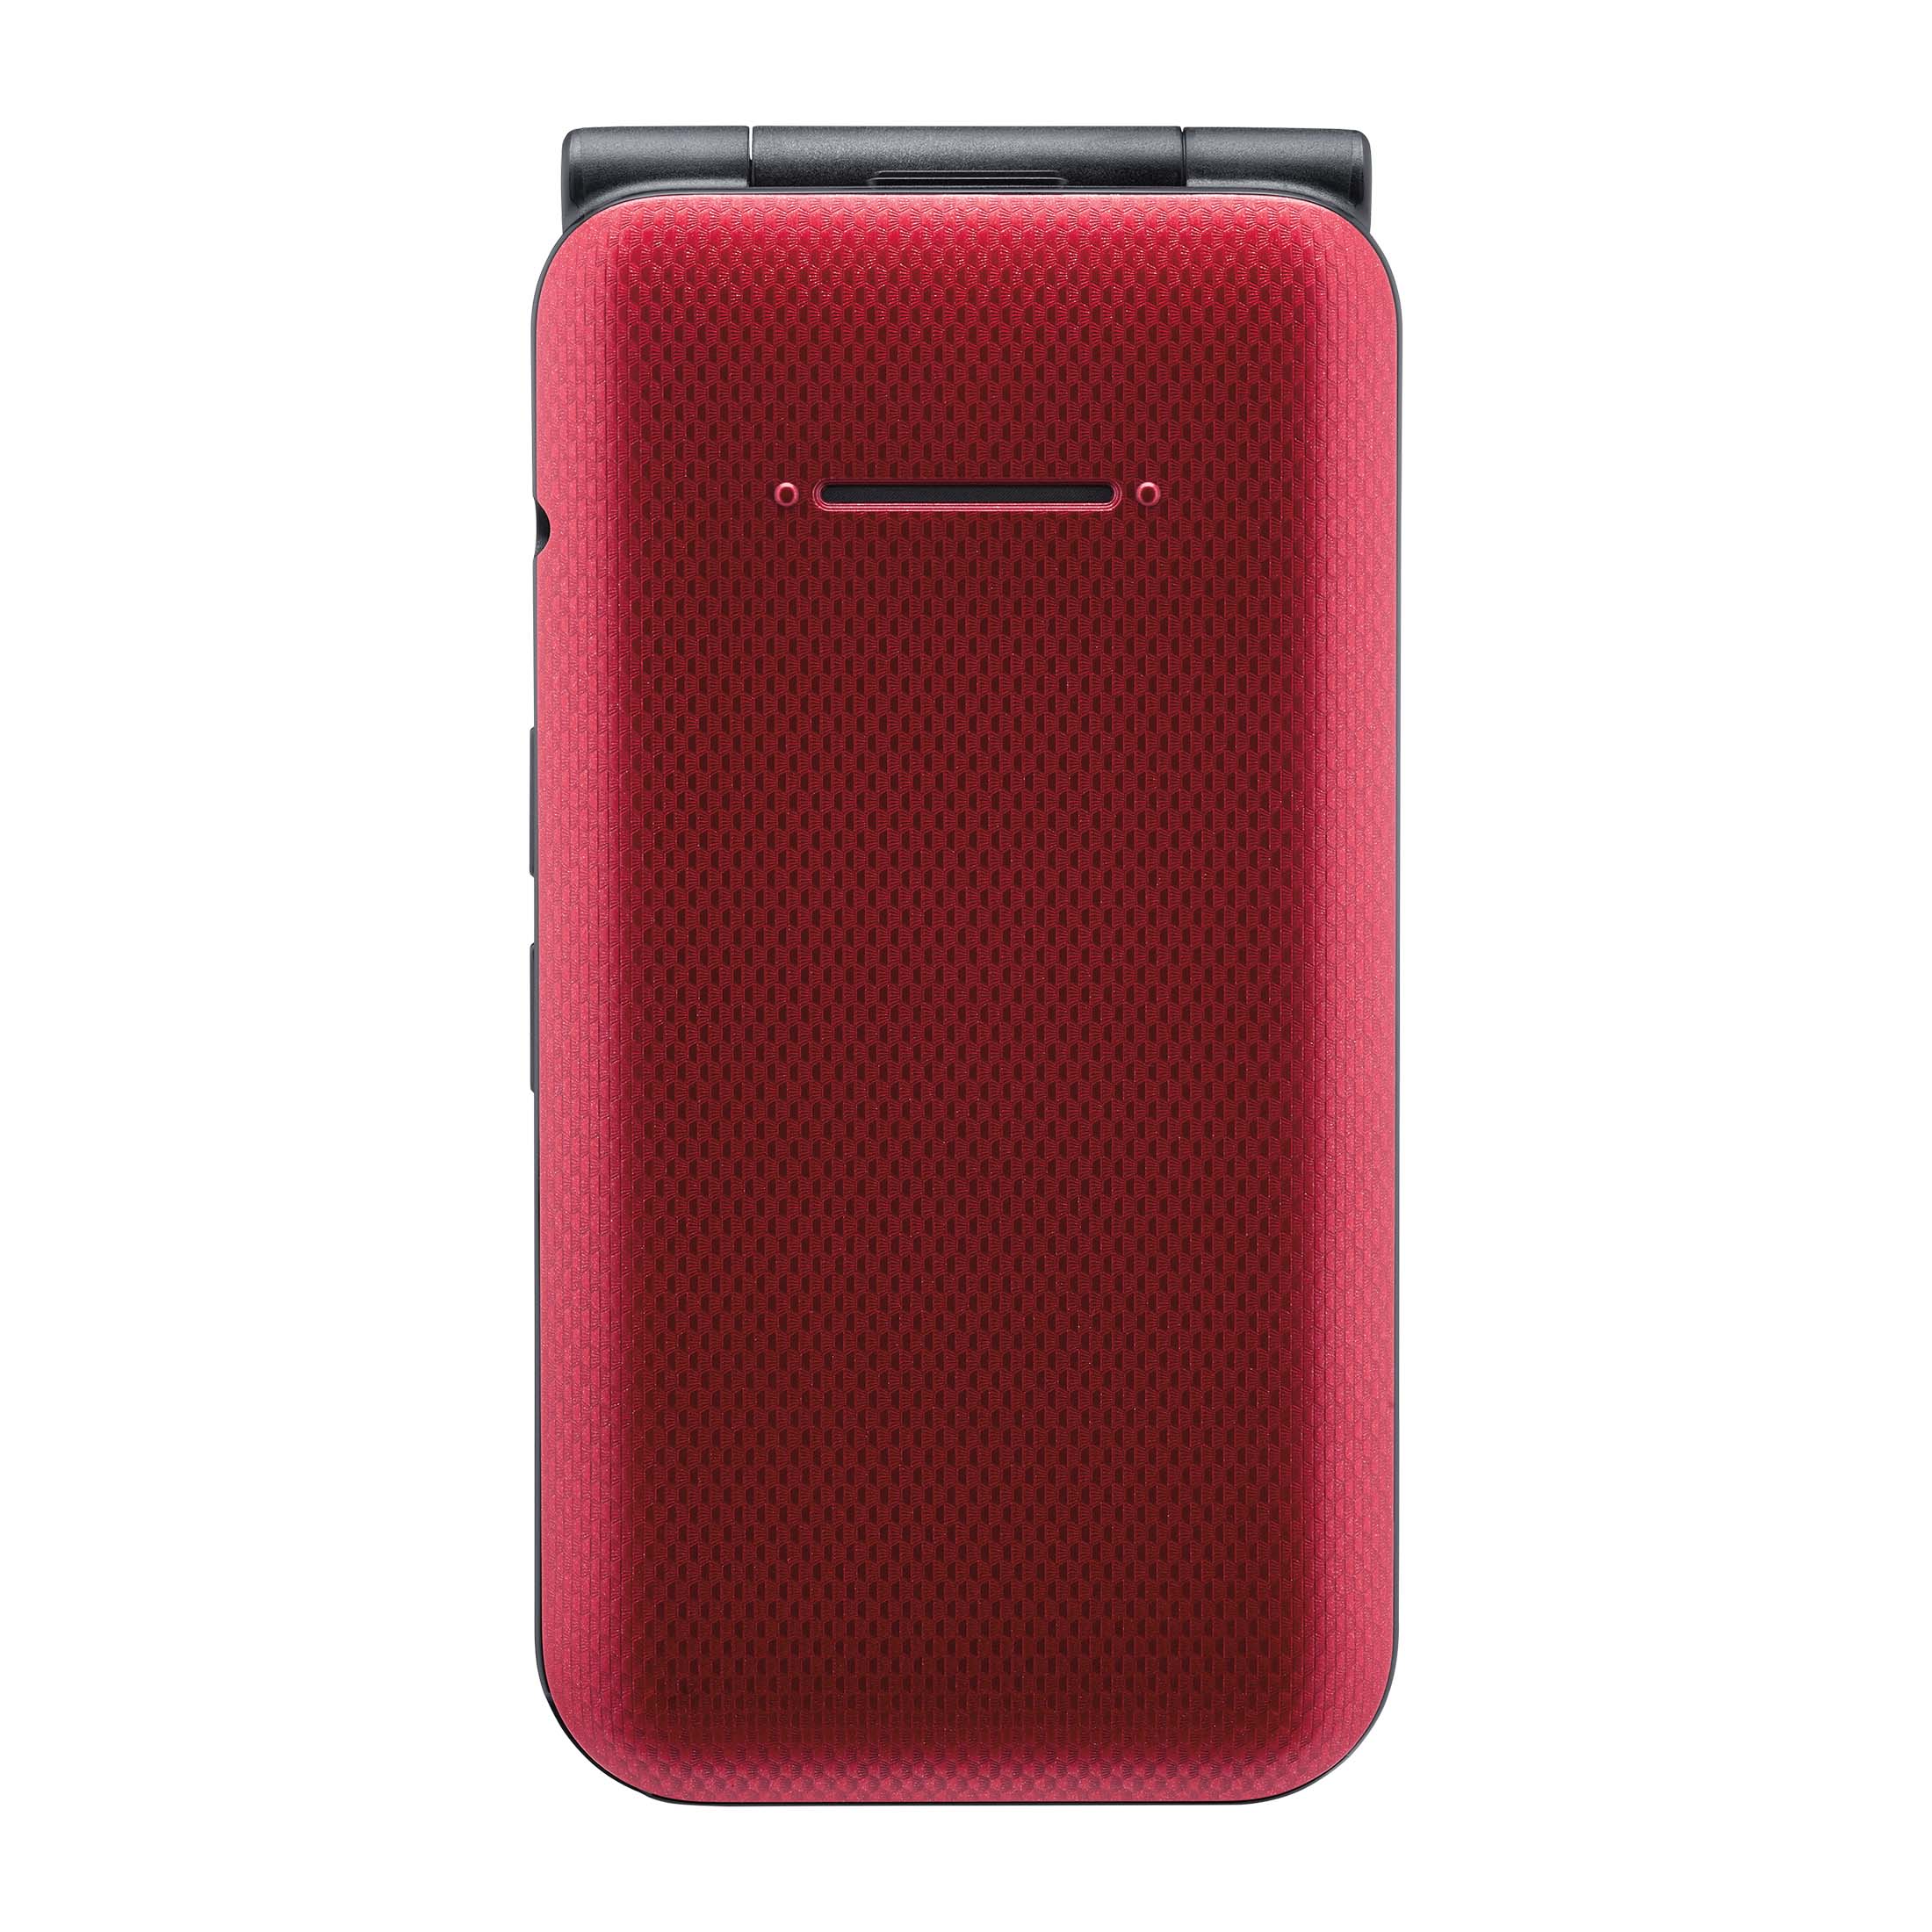 Consumer Cellular Link Ii Red Flip Phone